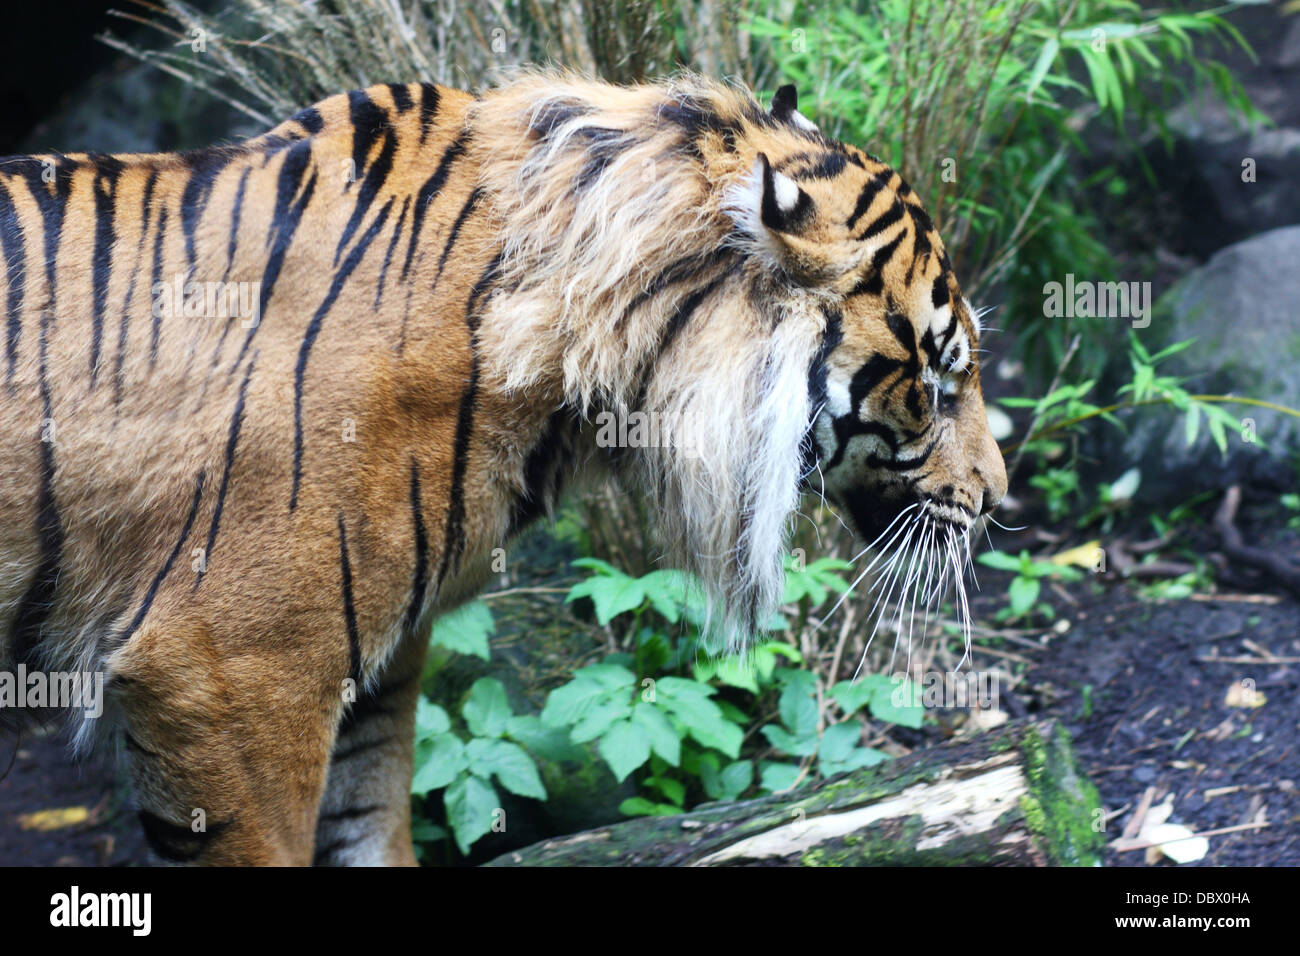 Tigre borgne looking sideways Banque D'Images